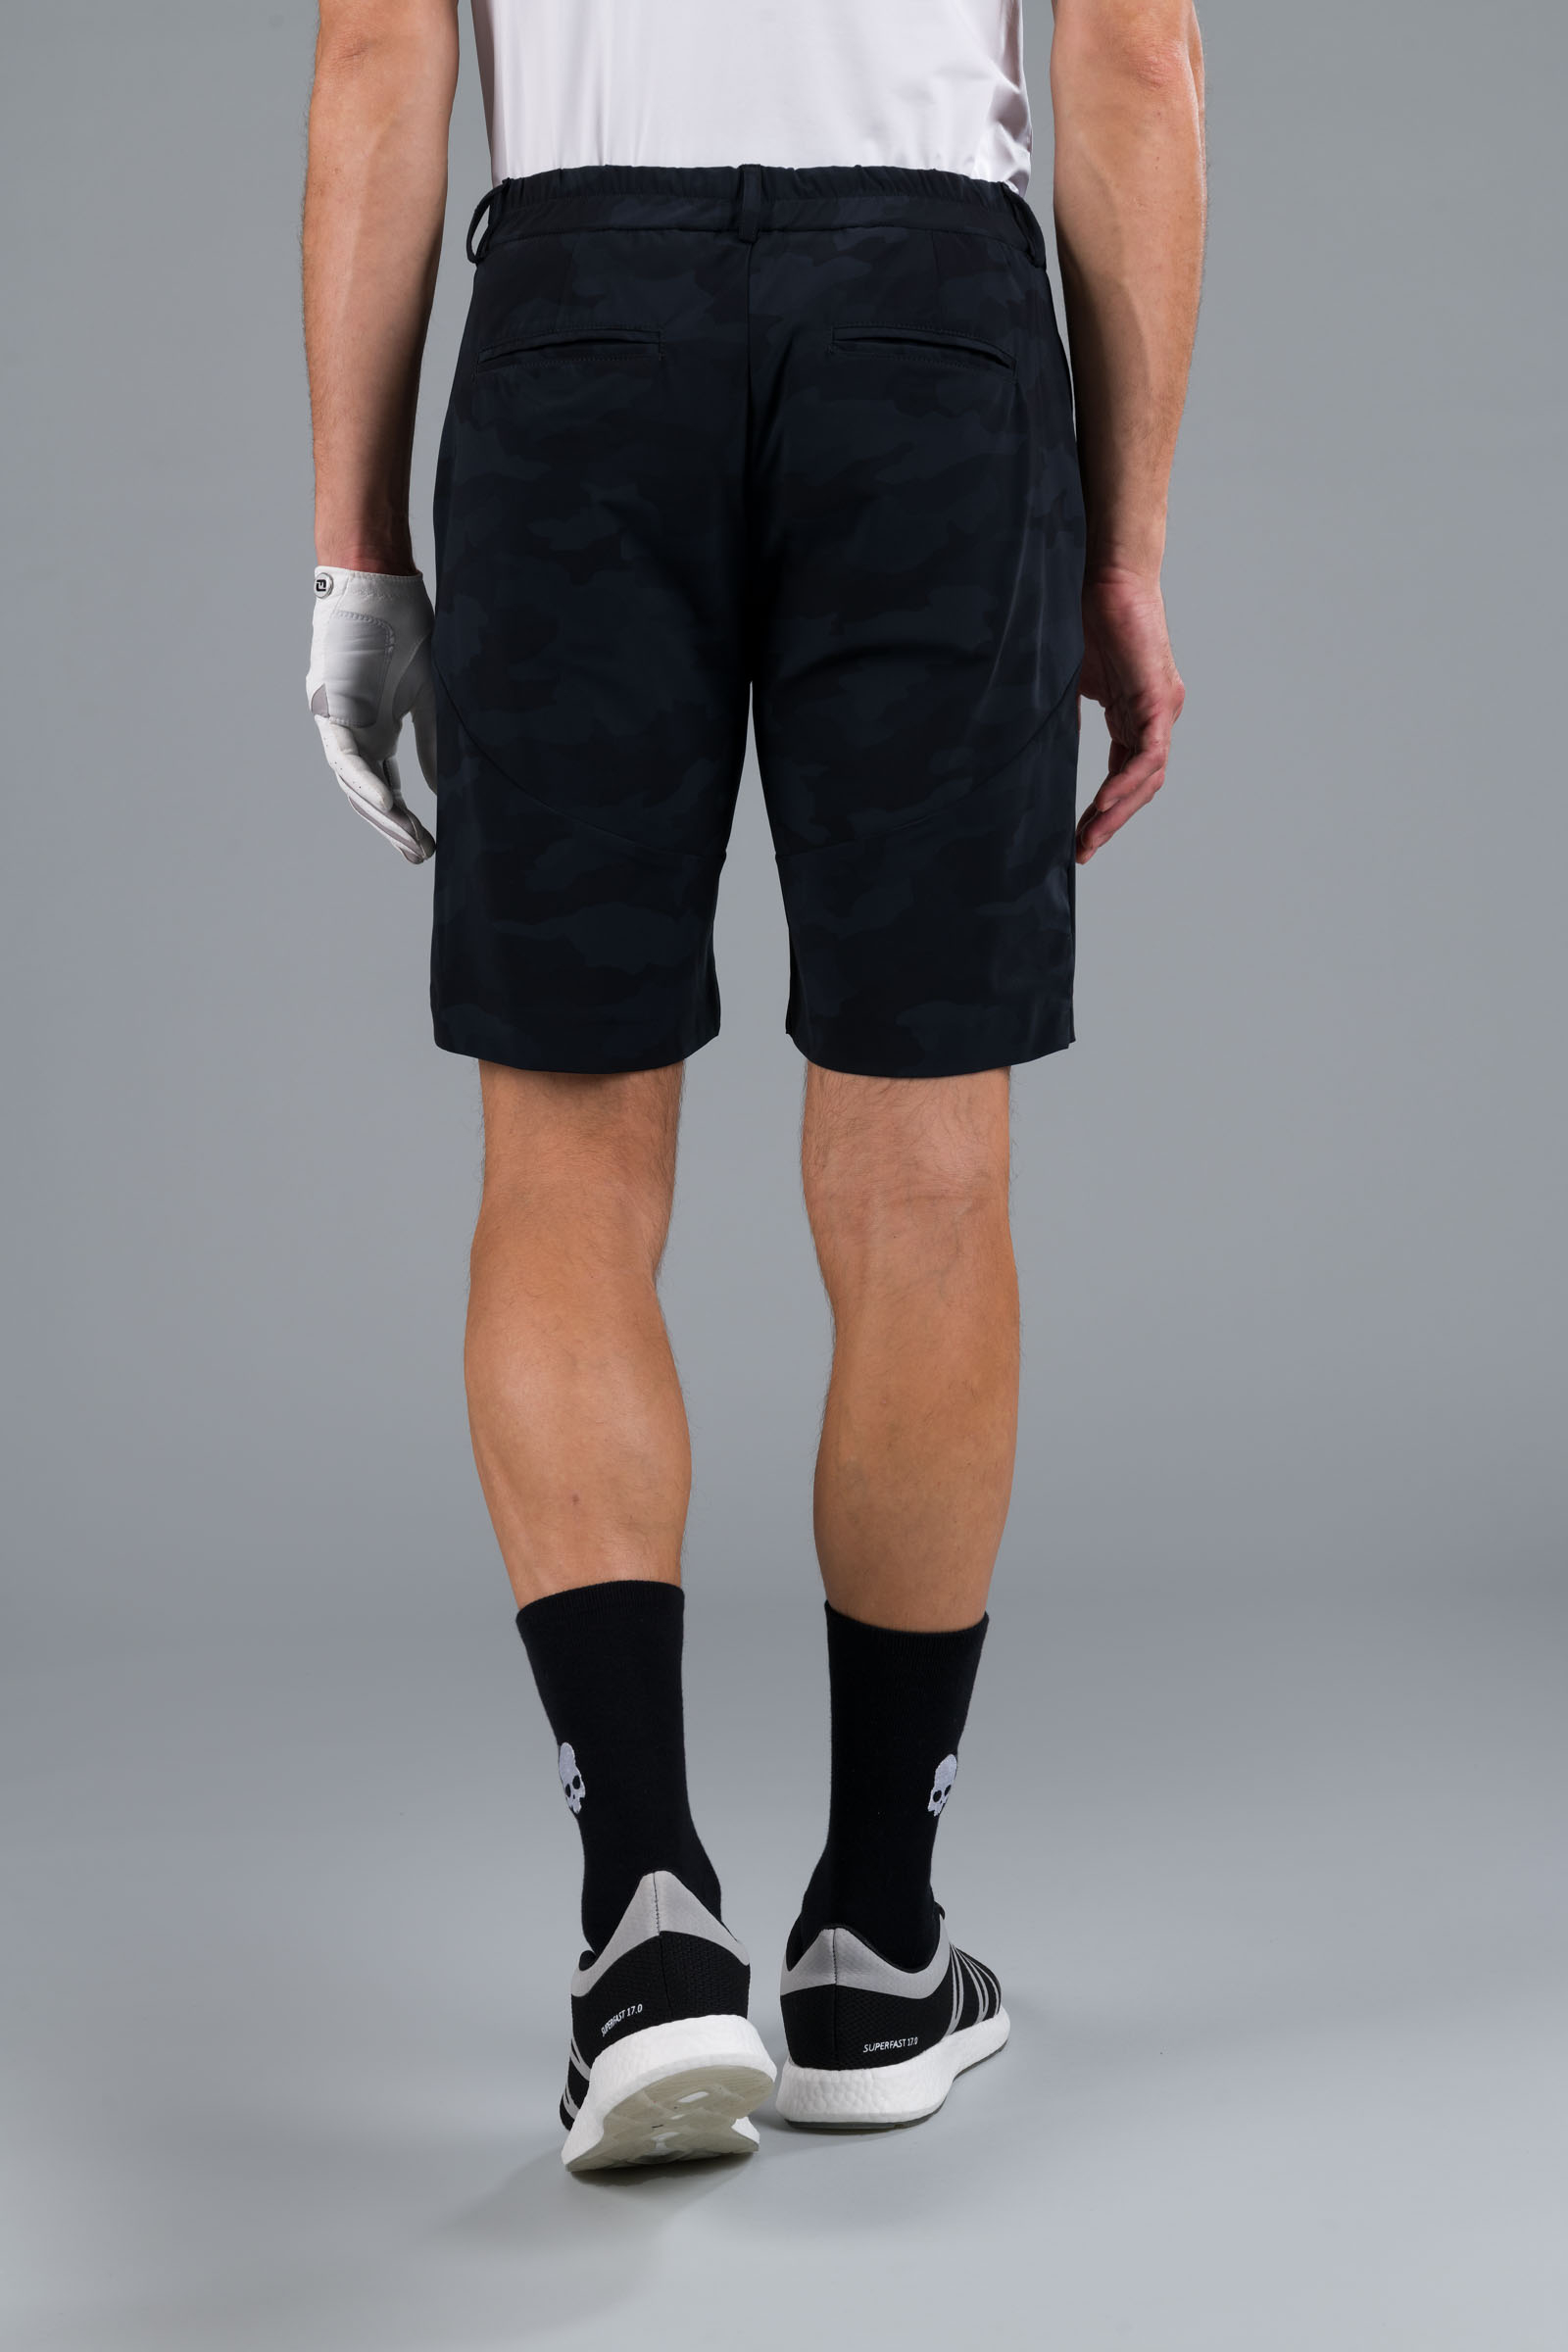 GOLF SHORTS - BLACK CAMOUFLAGE - Hydrogen - Luxury Sportwear